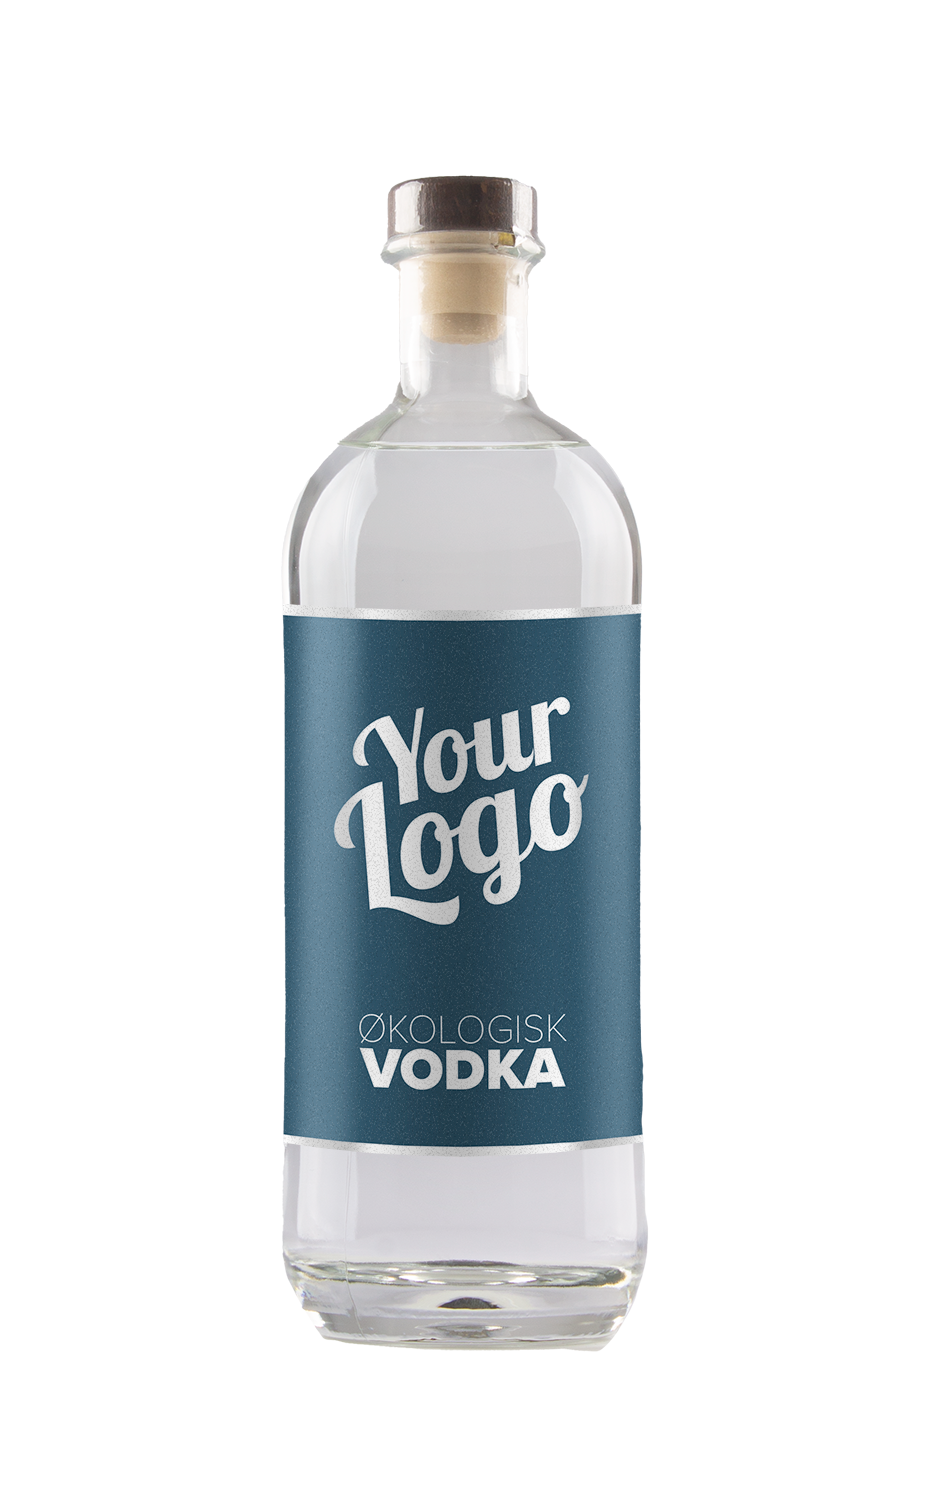 Økologisk Bornholmsk Vodka med logo